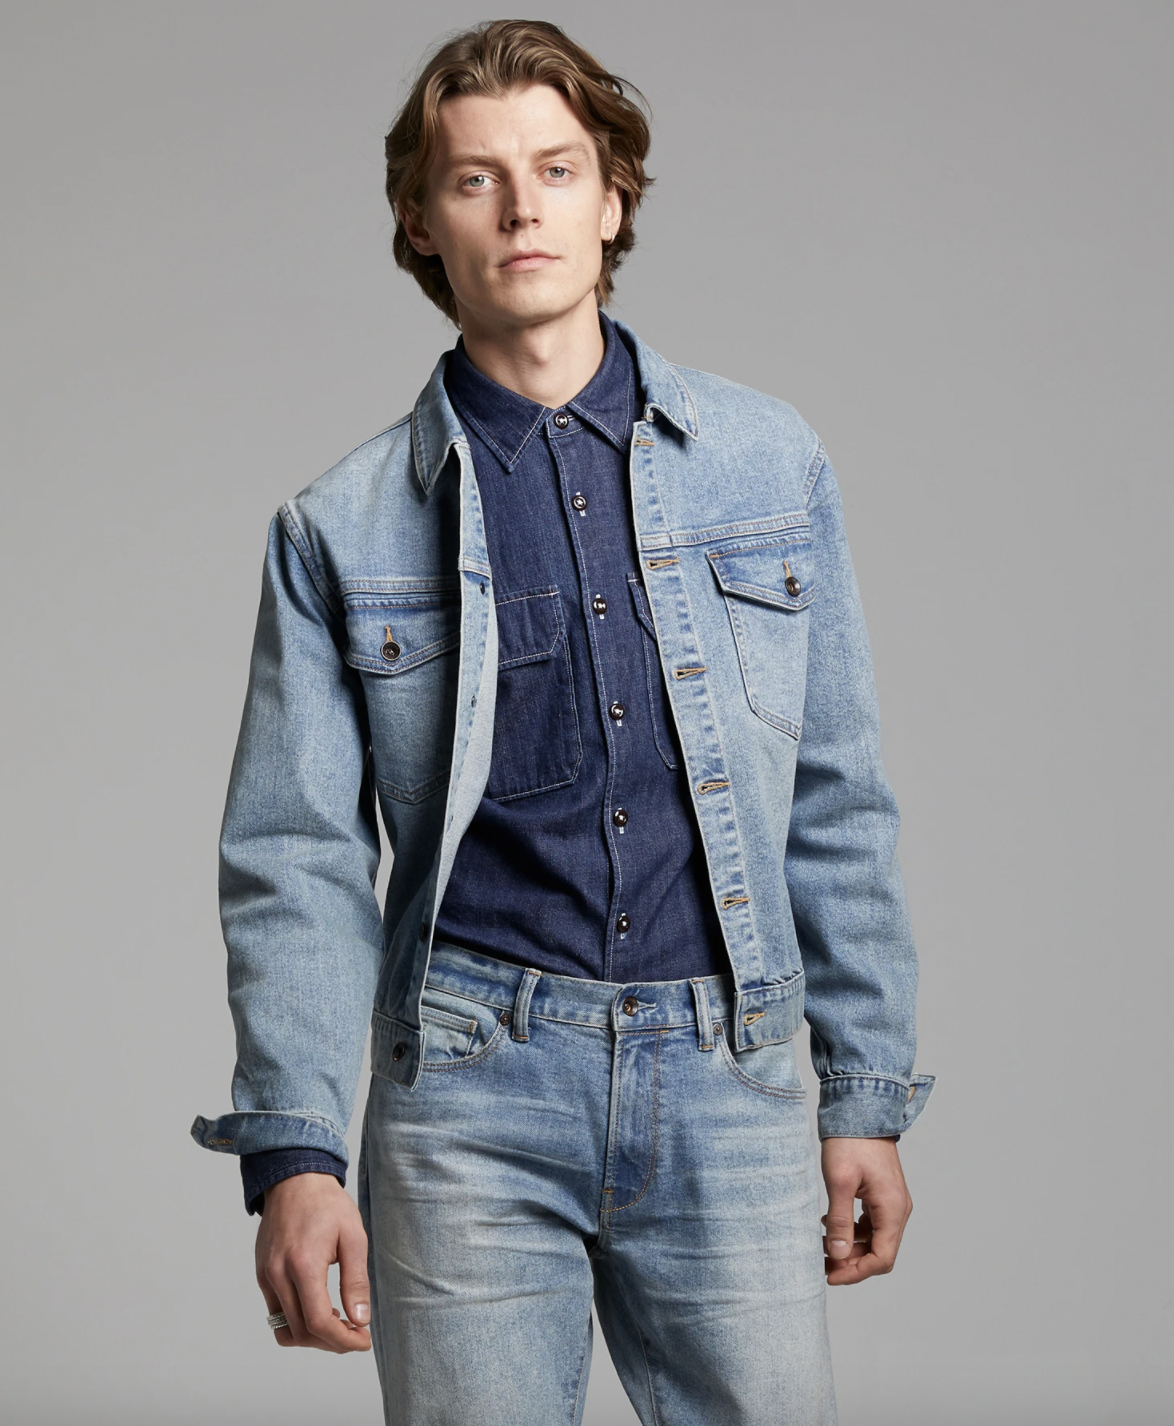 Buy ETTELO Boys Denim Trucker Jacket Casual Kid Fashion Slim Elastic Jeans  Jacket Coat 9-14 Years (Blue, 11-12Years) at Amazon.in